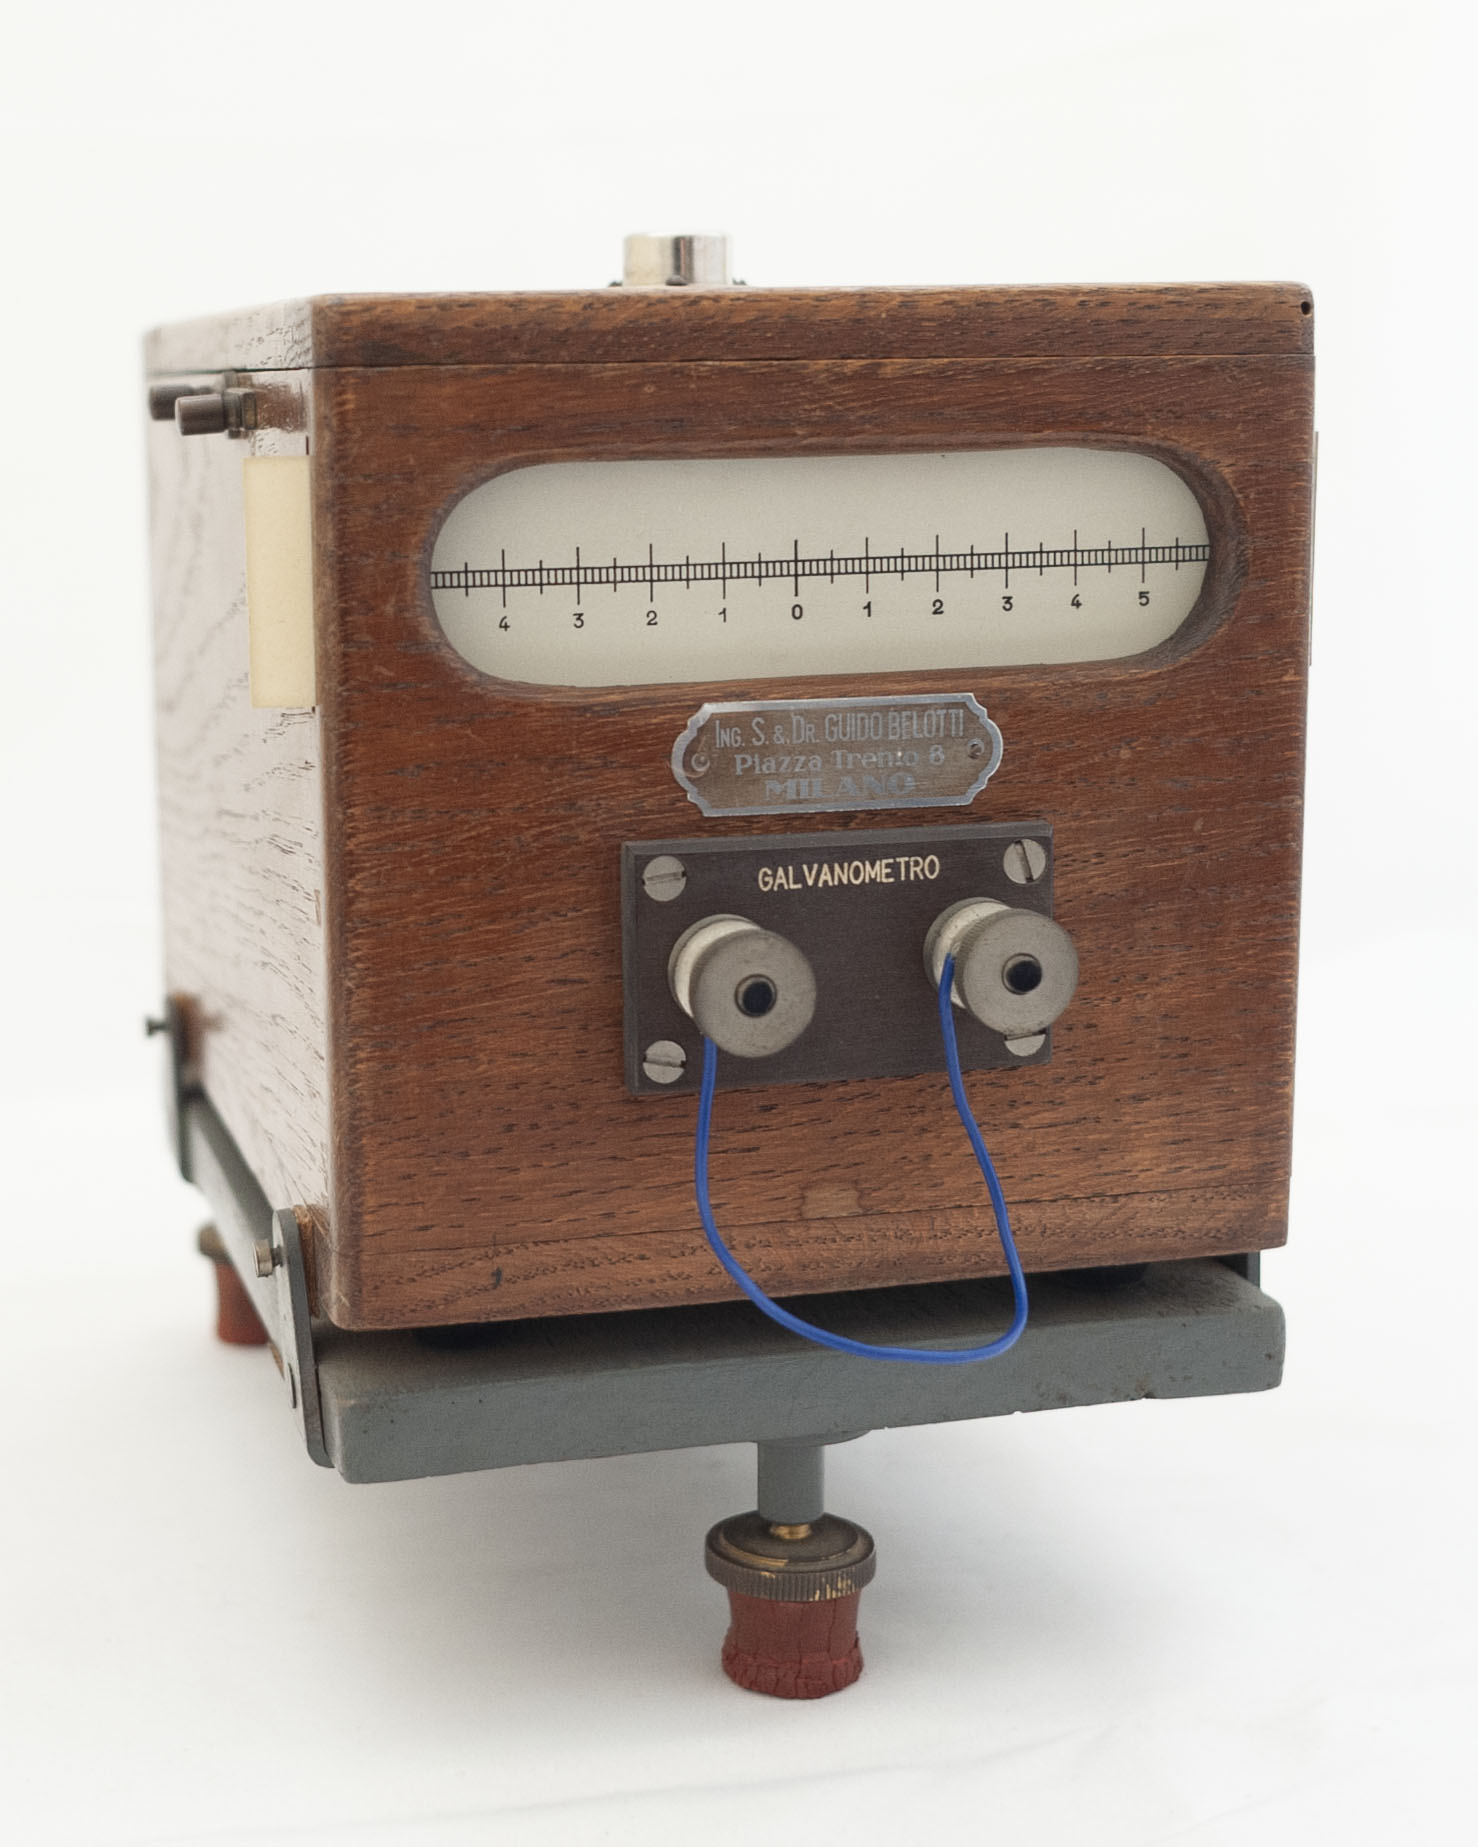 galvanometro di H. Tinsley & Co, Ing. S. & Dr. Guido Belotti (metà XX)